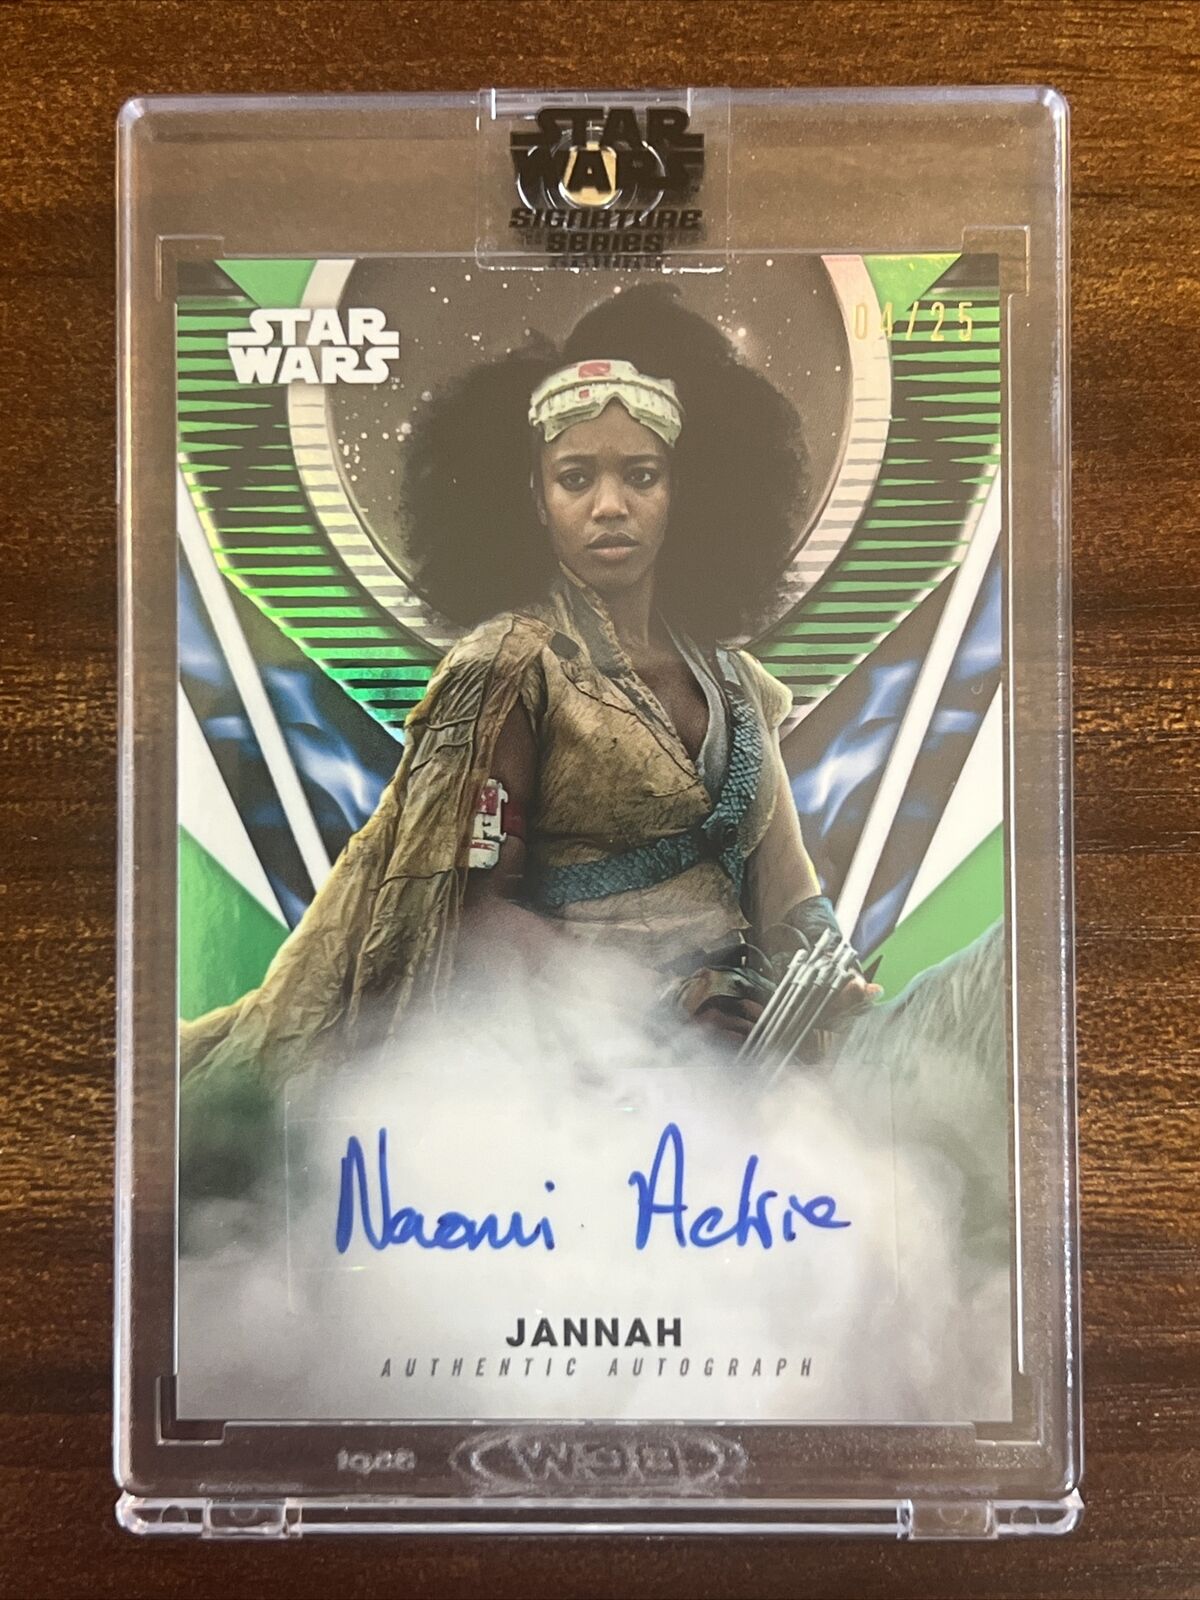 Star Wars Signature Series Naomi Ackie as Jannah Rise of Skywalker 4/25